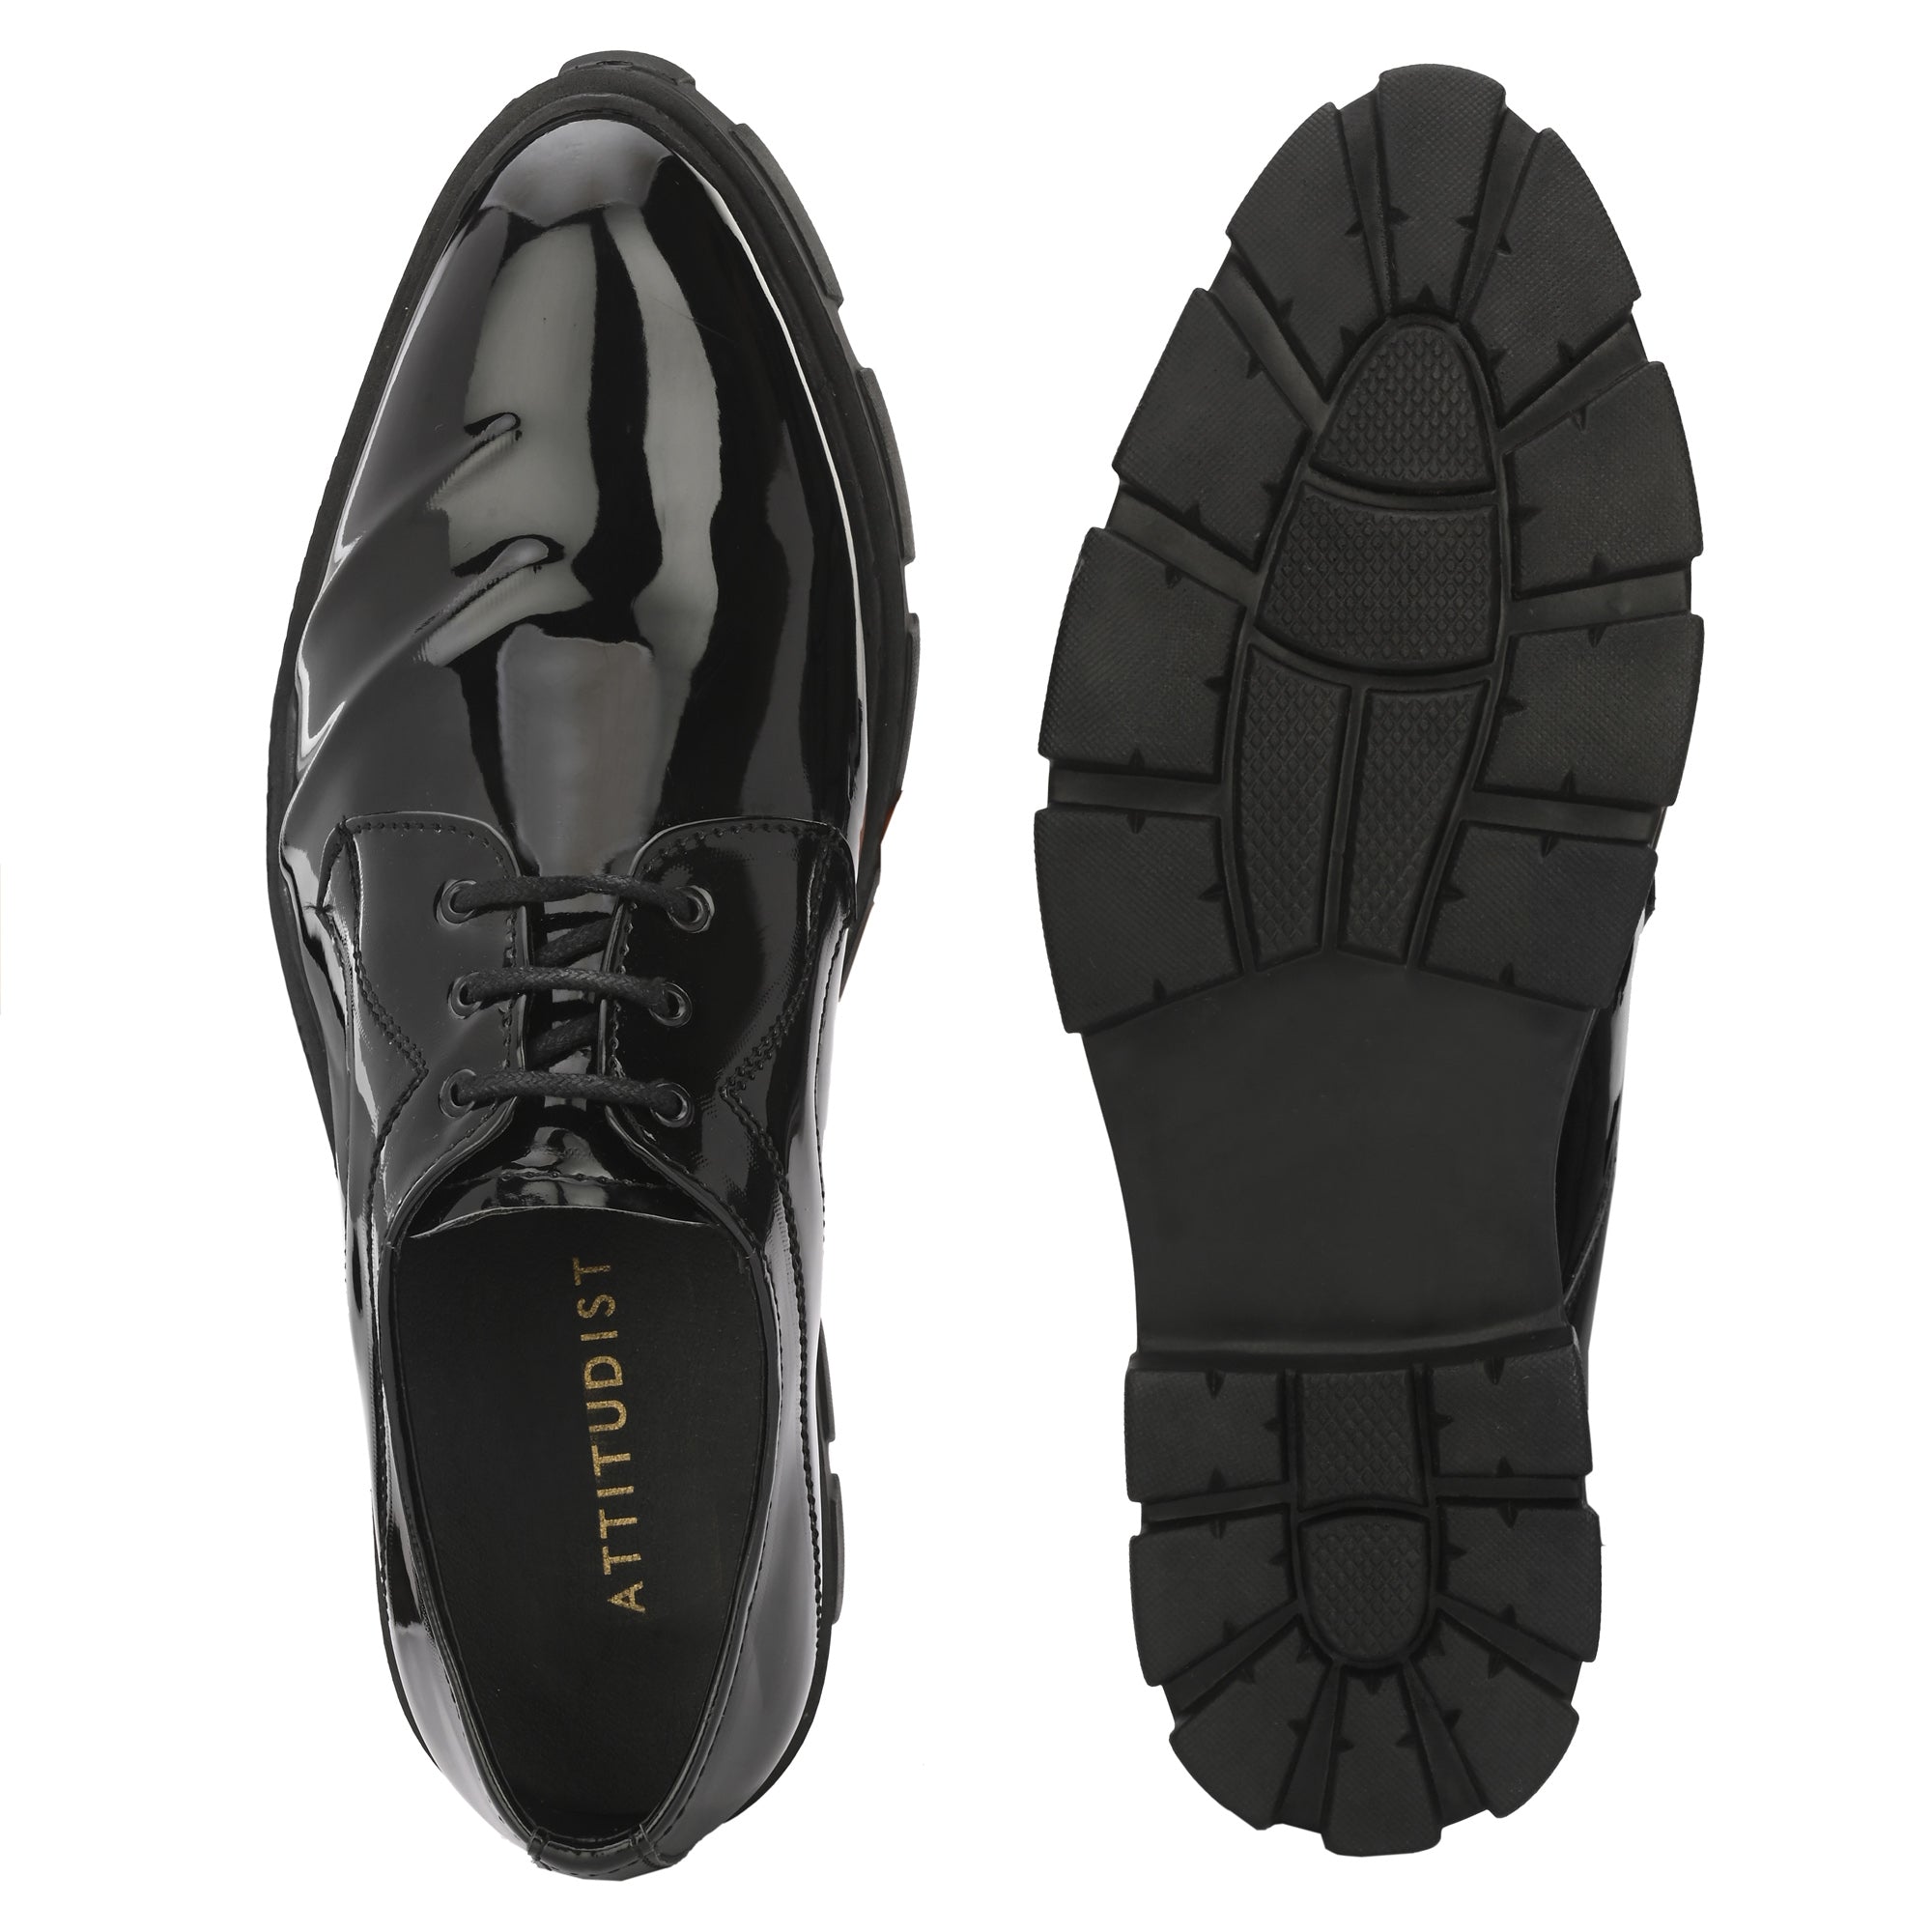 attitudist-black-super-glossy-formal-derby-shoes-for-men